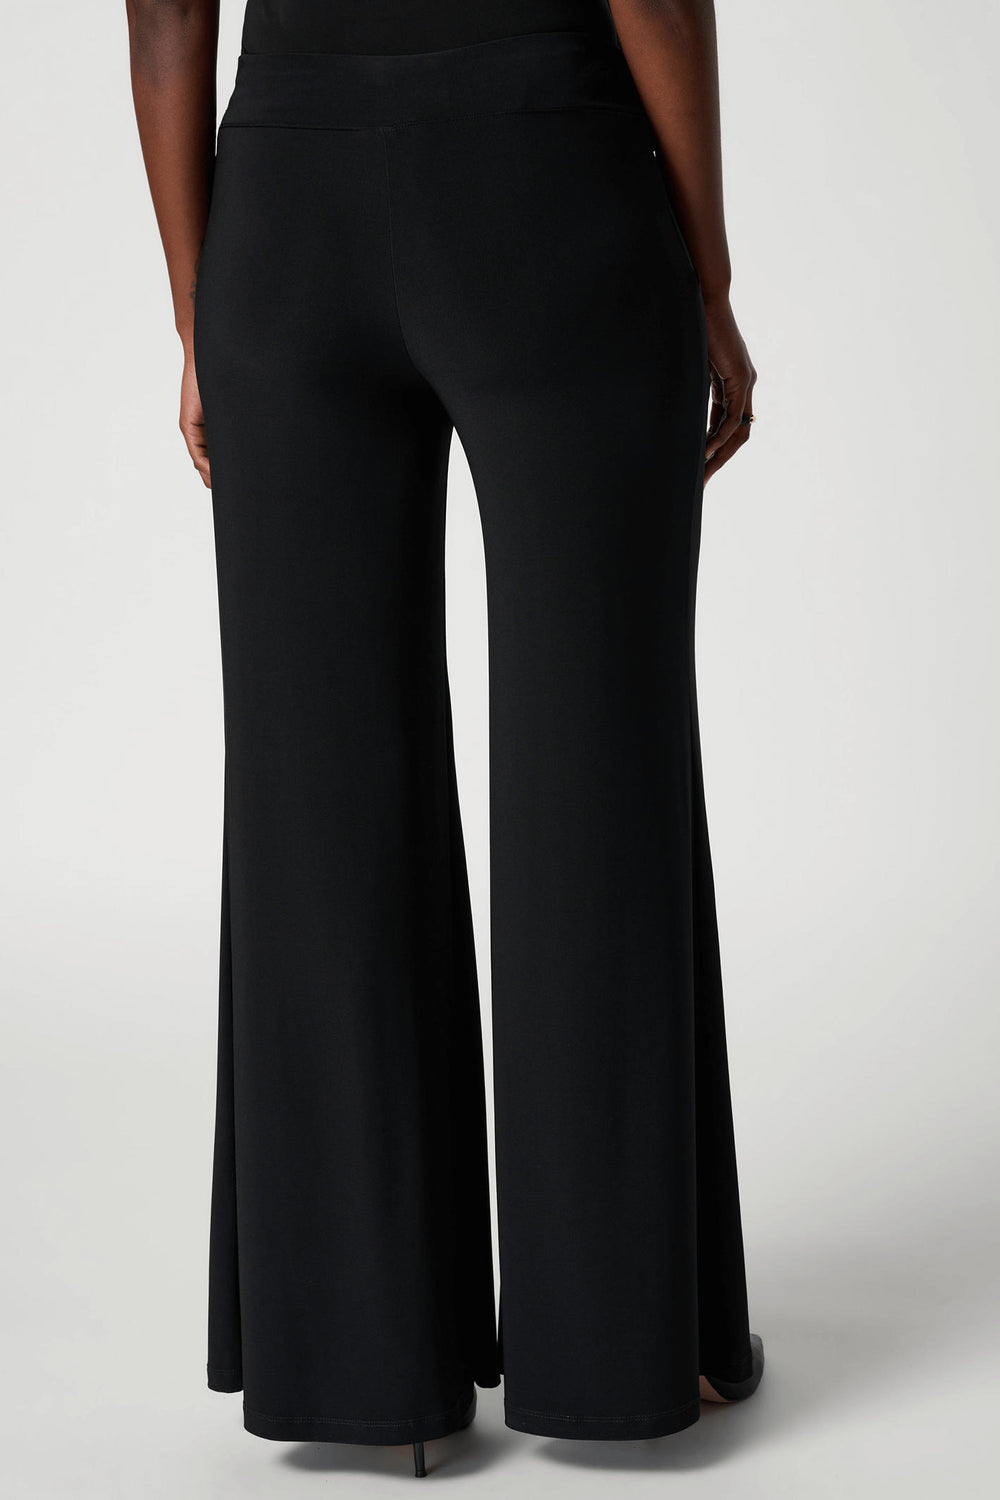 Joseph Ribkoff 161096 Black Pull-On Flared Trousers - Olivia Grace Fashion